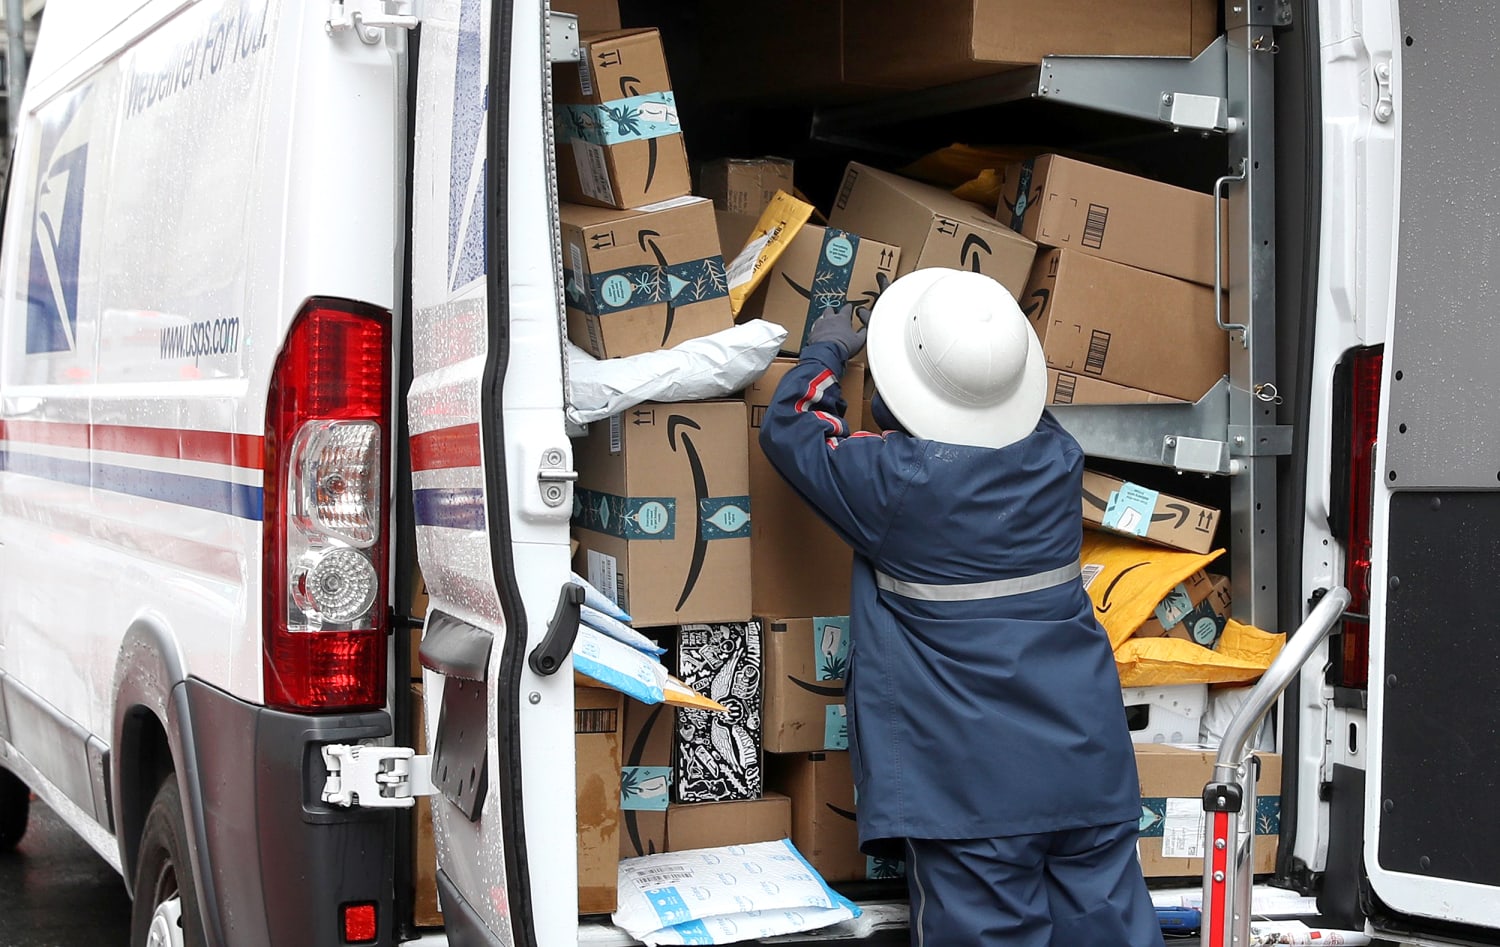 https://media-cldnry.s-nbcnews.com/image/upload/newscms/2019_50/3146071/191212-postal-worker-boxes-truck-ew-239p.jpg